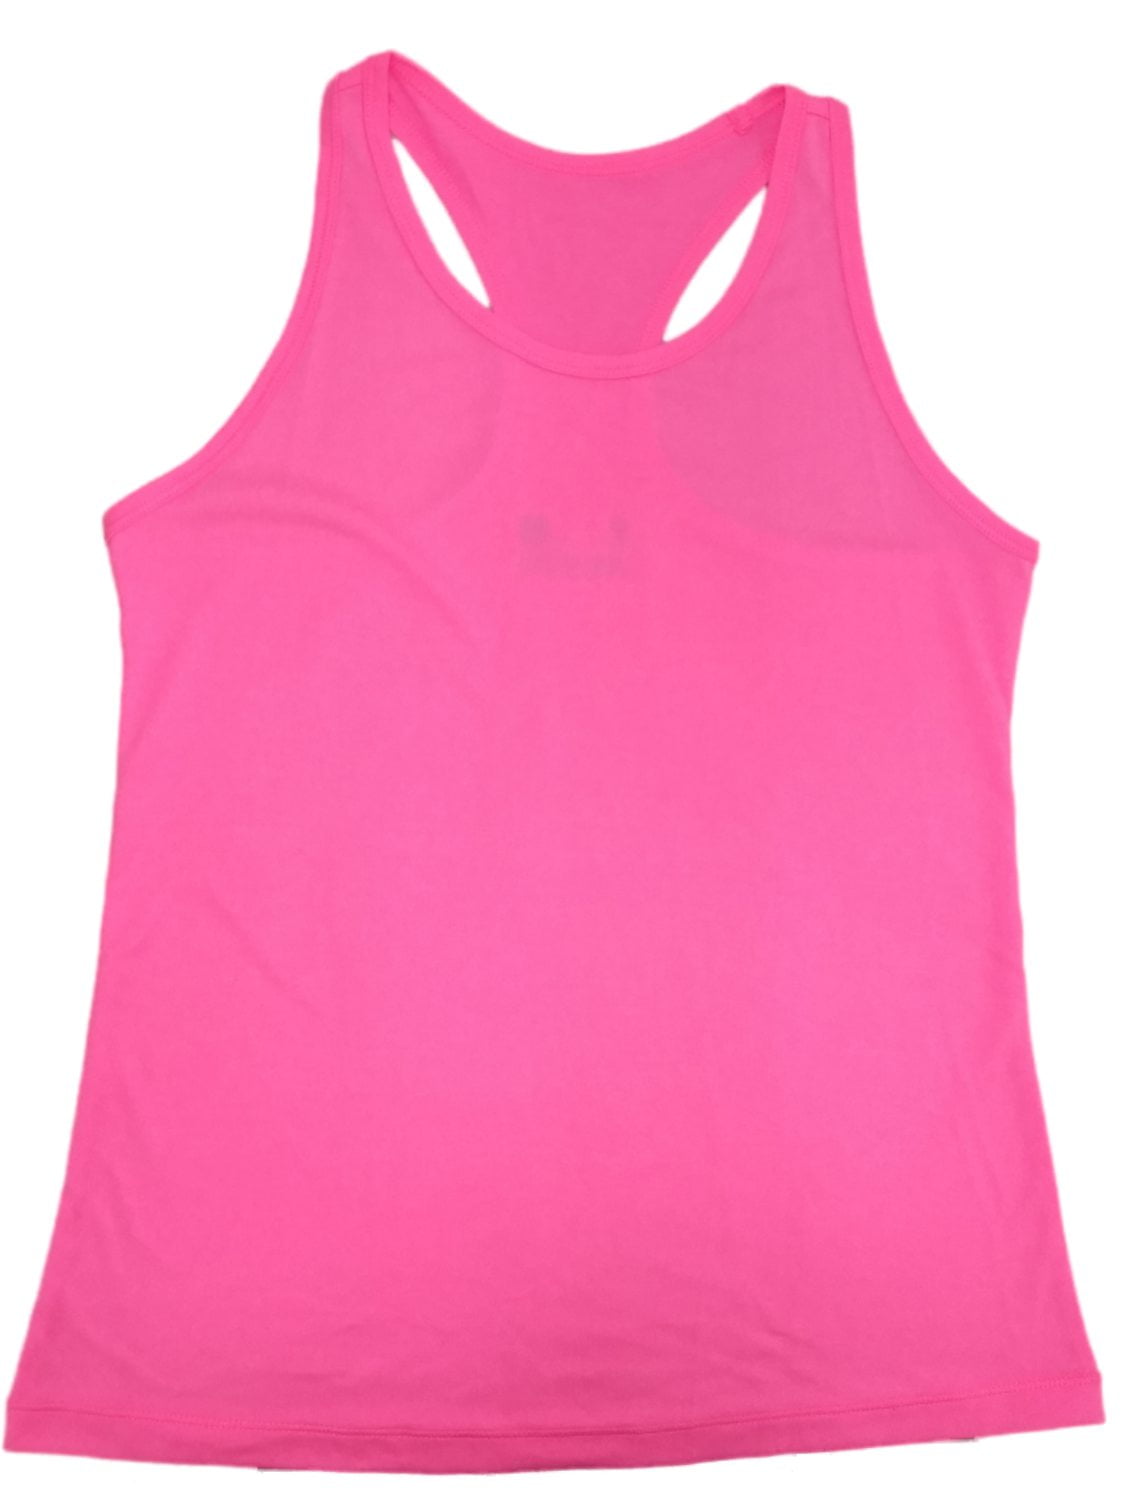 Girls Hot Pink Athletic Tank Top Racerback Tee Shirt X Large 16 